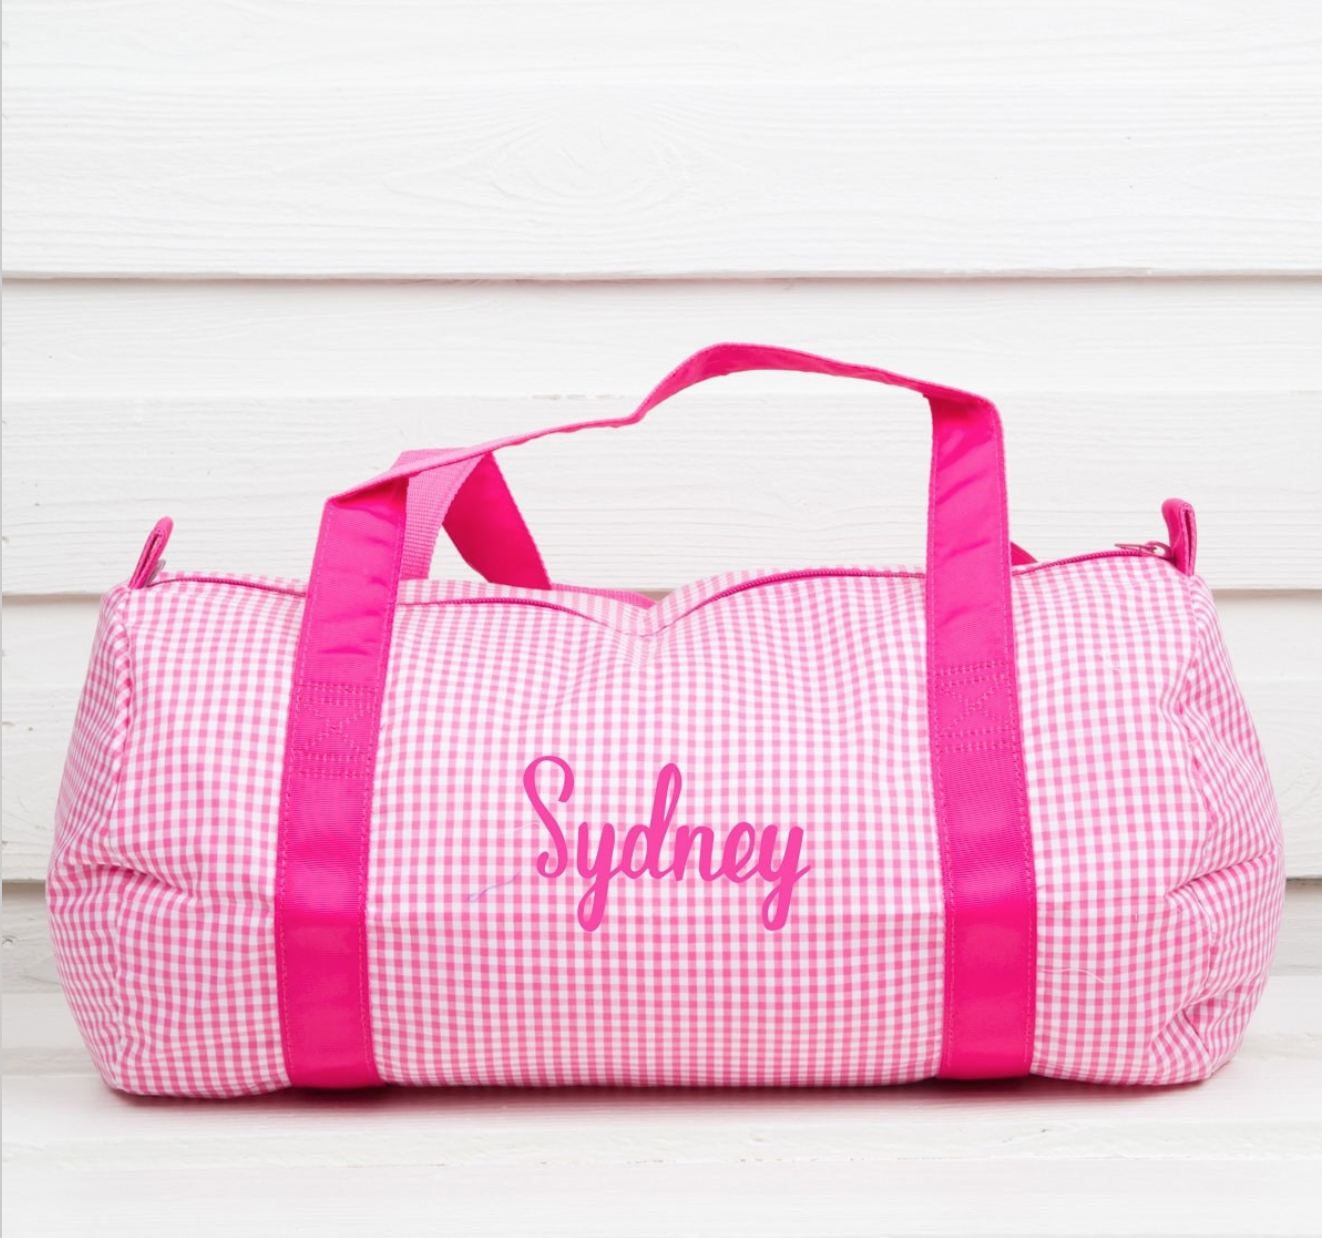 Personalised Bag / Duffle Bag / Baby Bag / Monogrammed Weekender Bags /  Hospital Bag / ASPEN Duffle Bag / LARGE